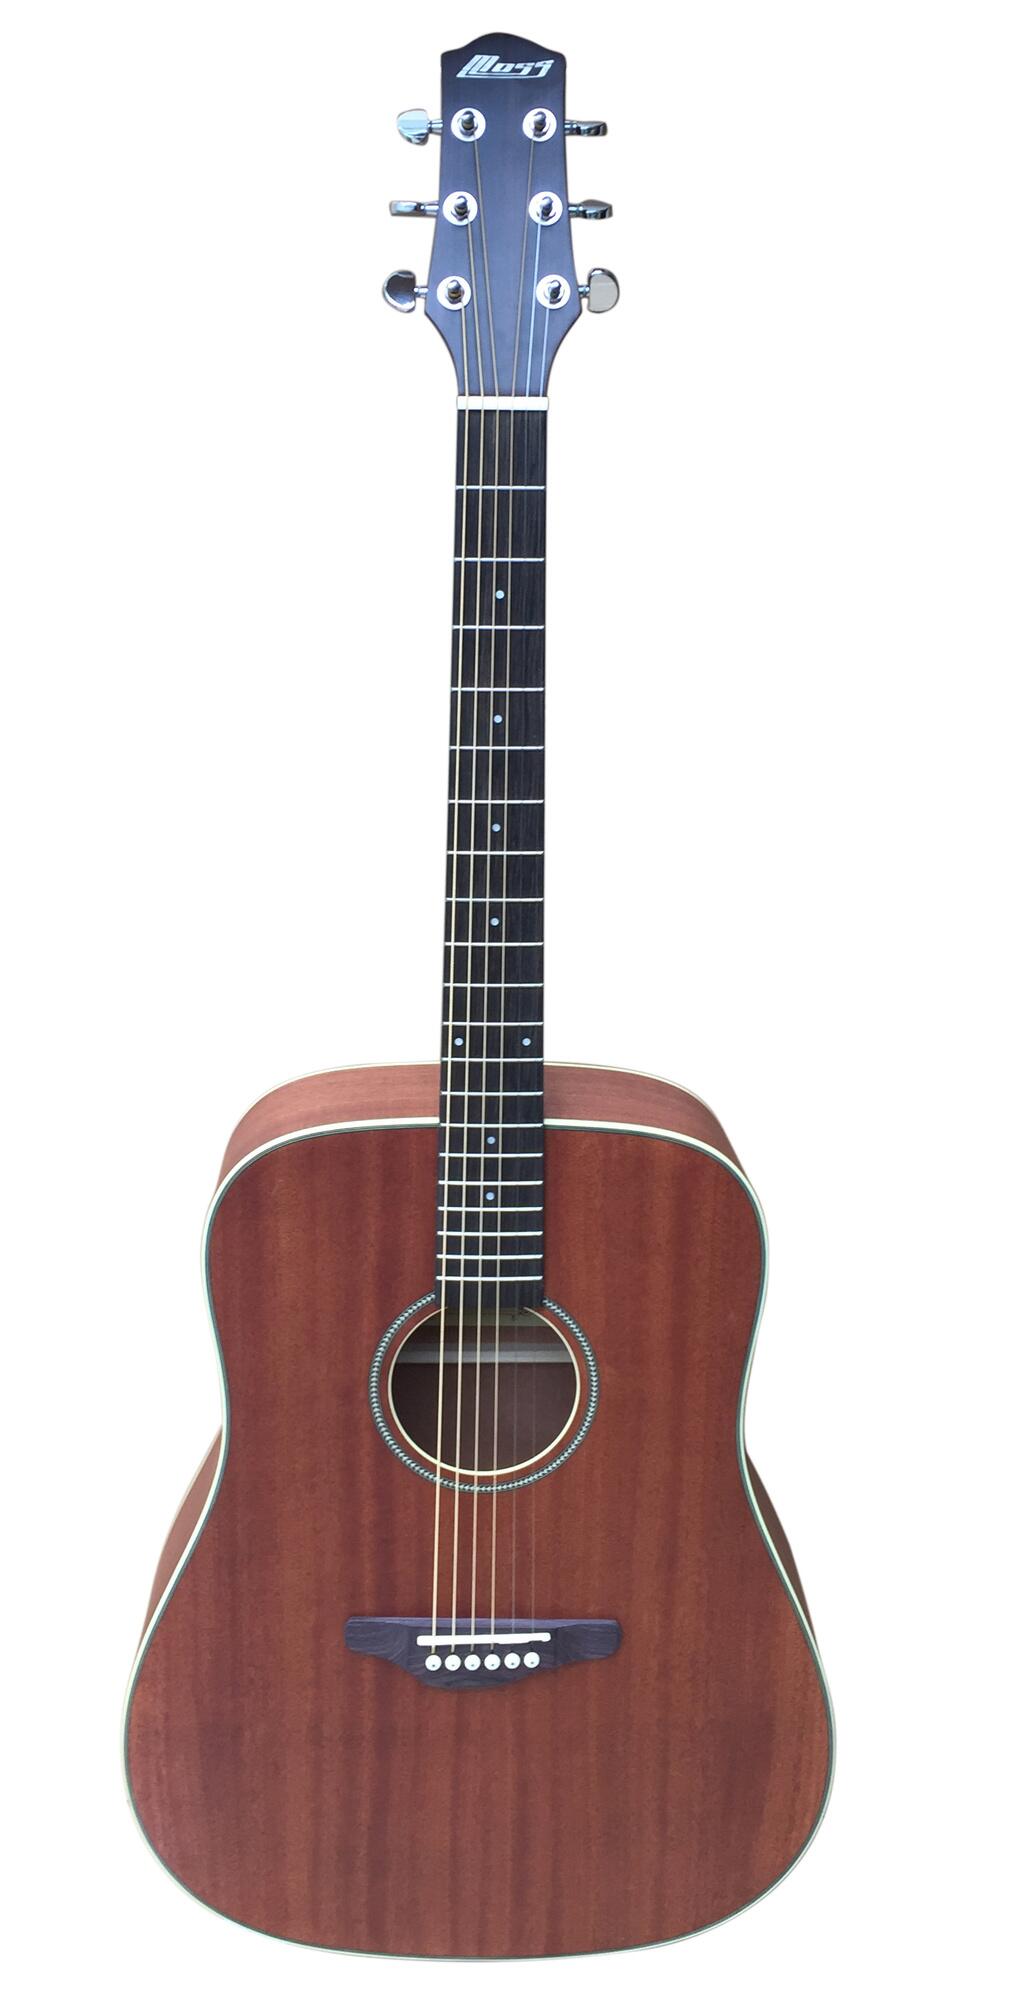 mesh national flag bluse Moss F-41 Western Guitar på tilbud - Køb god western guitar på tilbud.